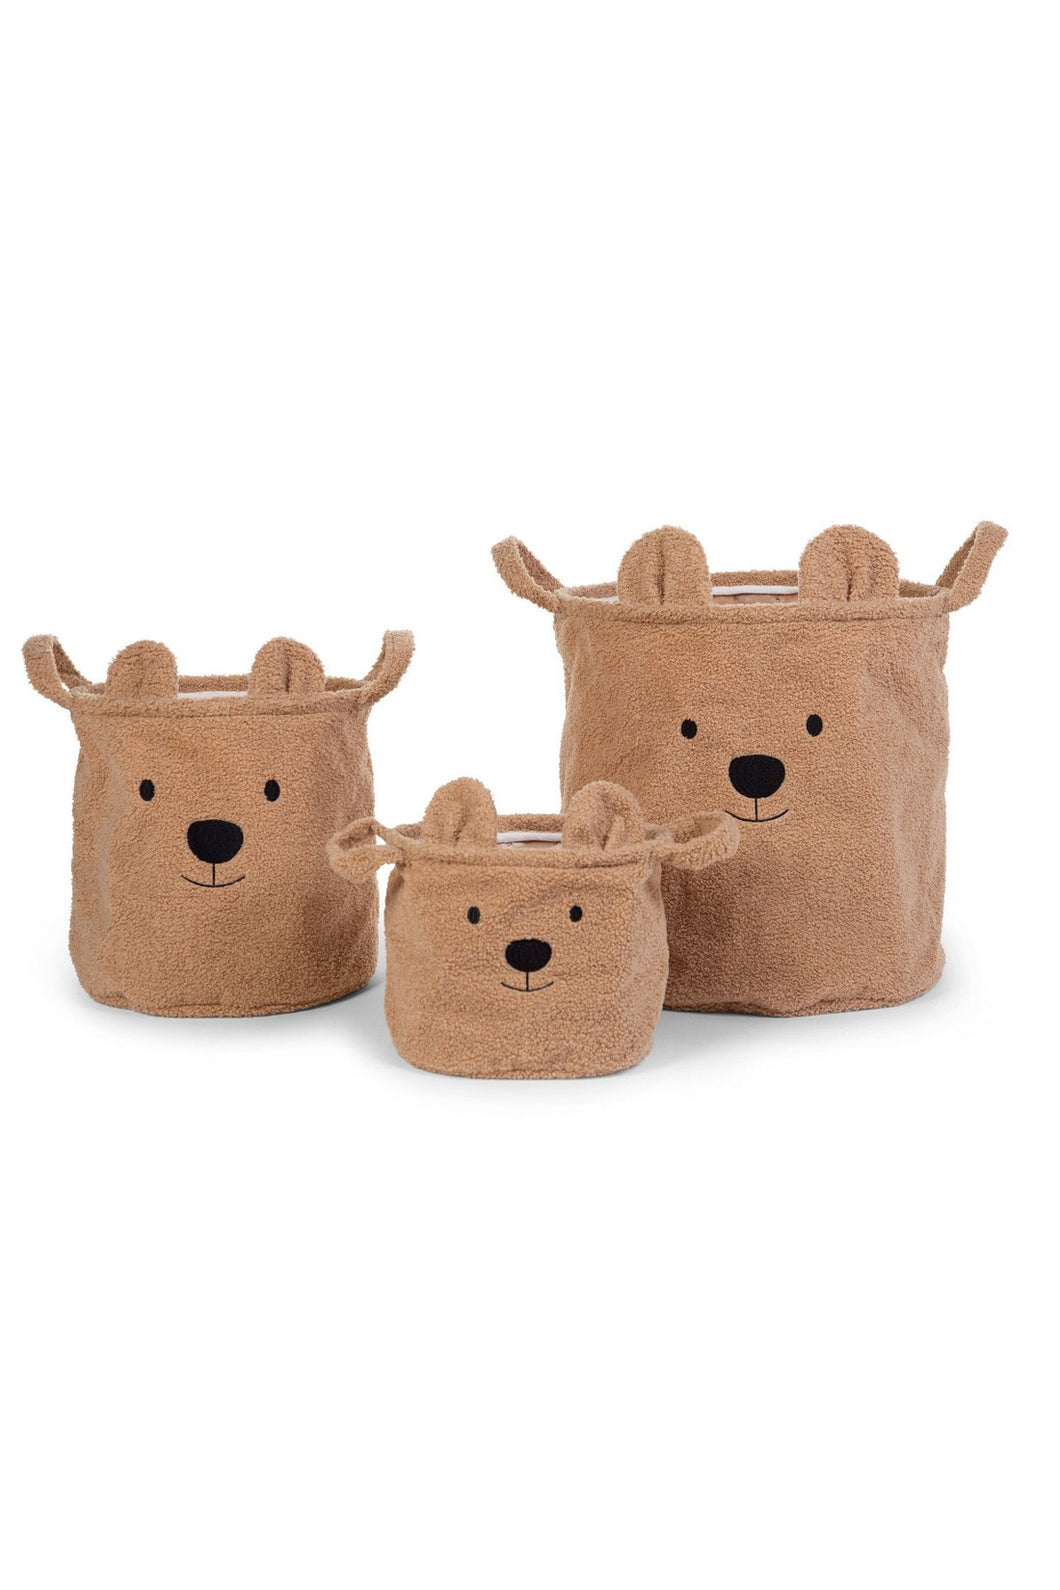 Childhome Teddy Baskets - Set Of 3 - Beige